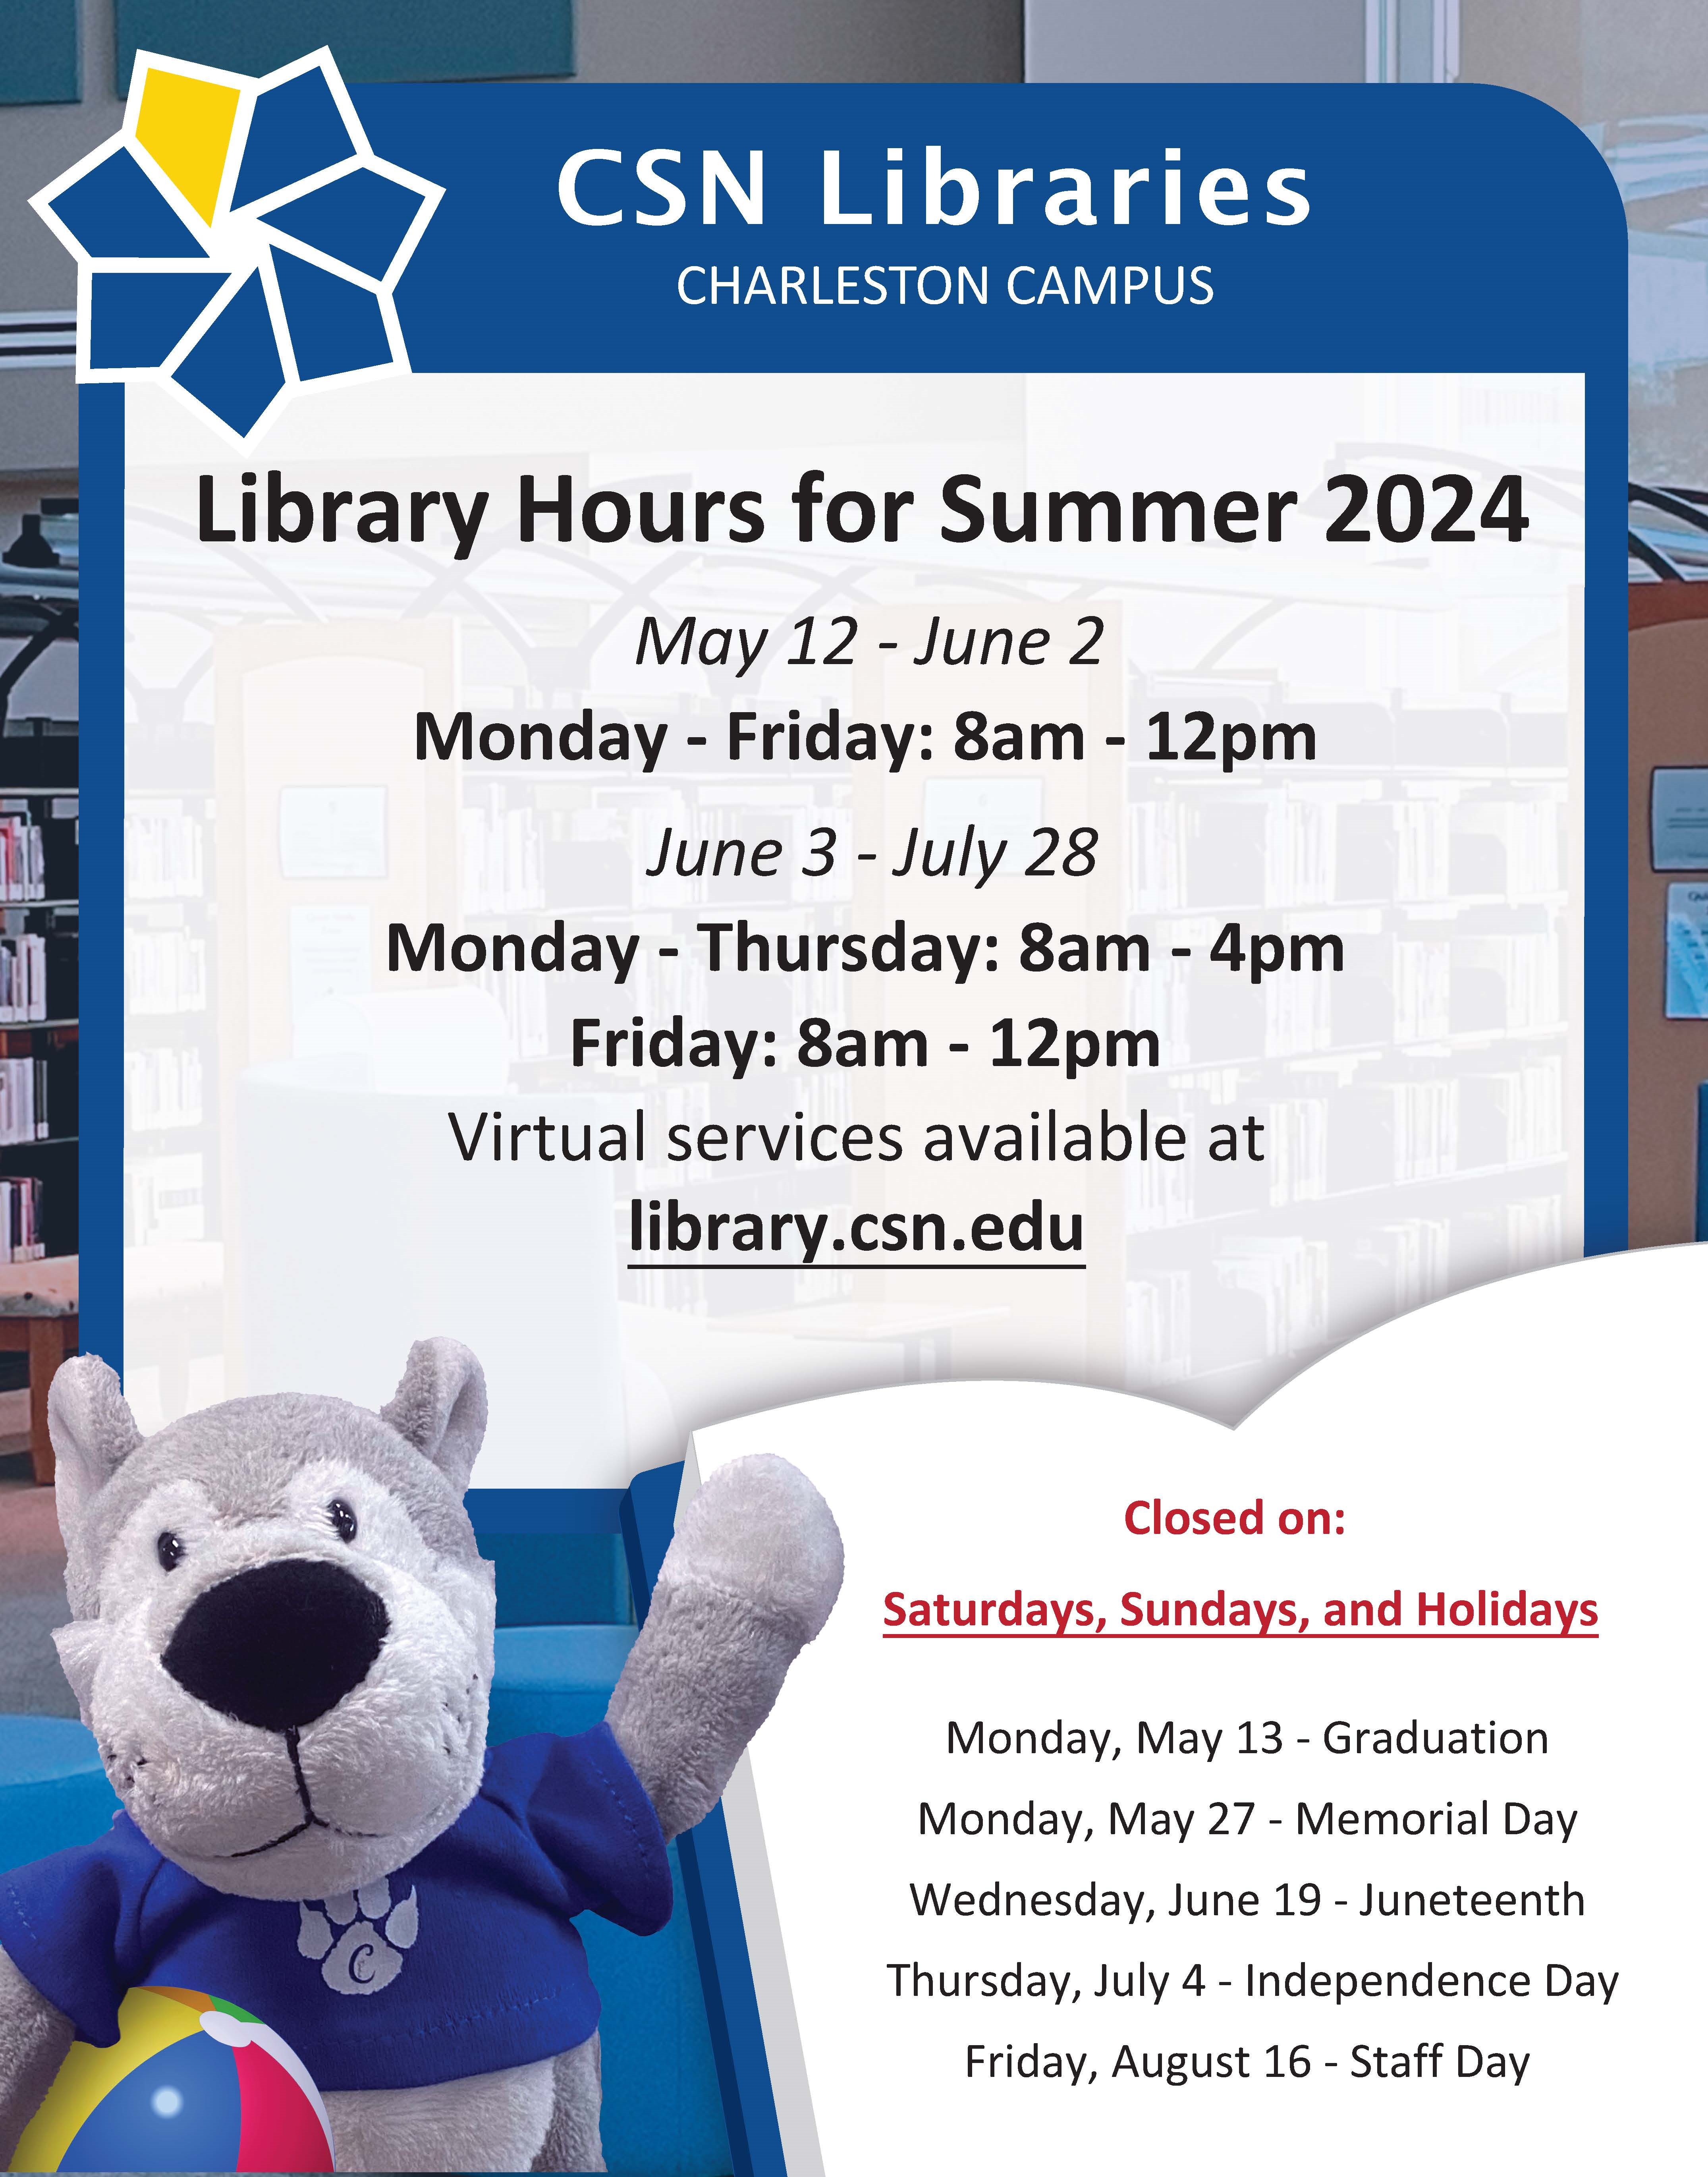 CSN Libraries Summer Hours - Charleston Campus - May 12-July 28